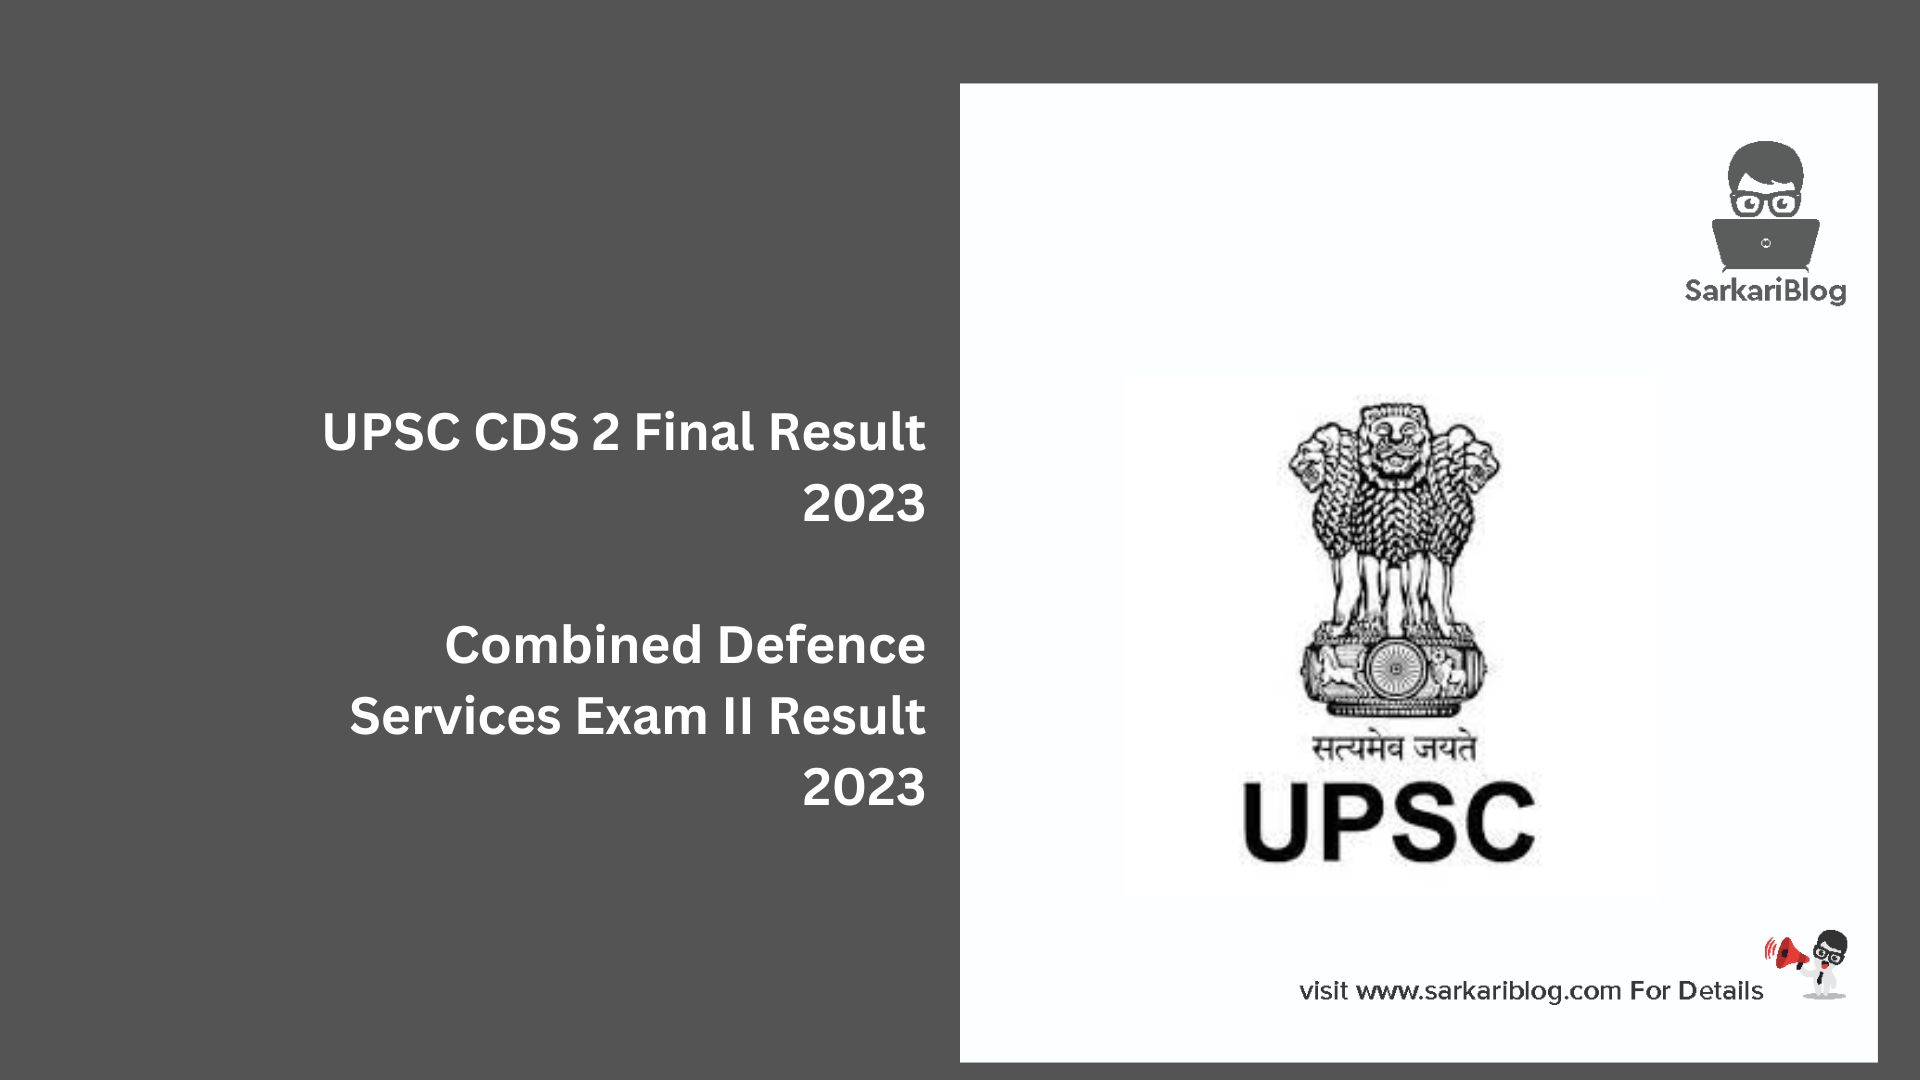 UPSC CDS 2 Final Result 2023